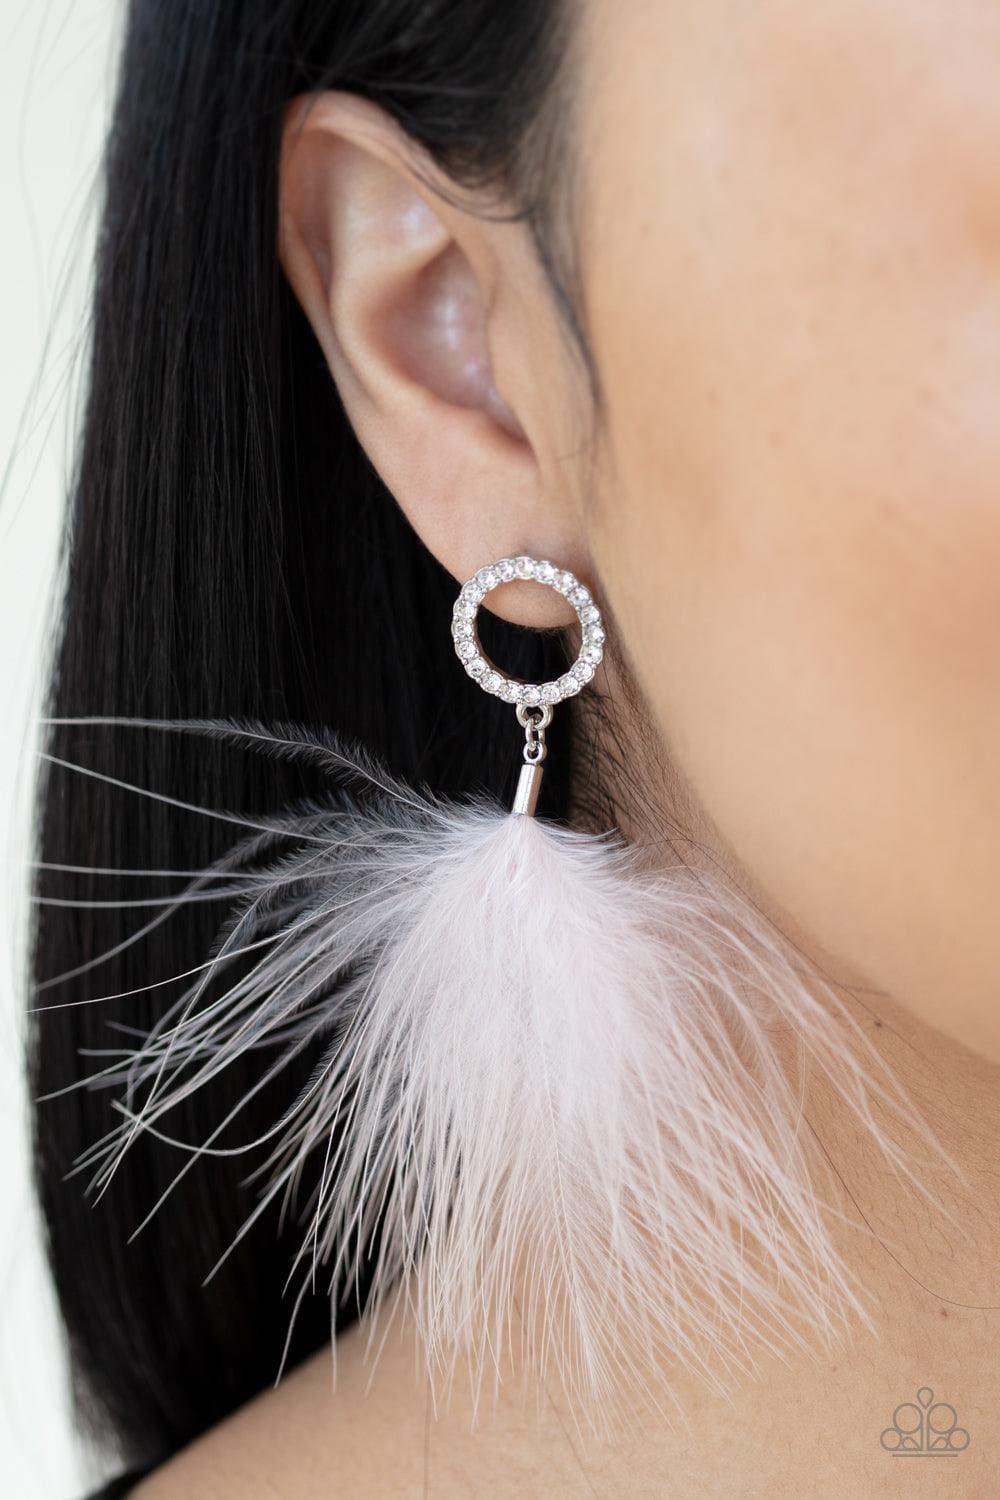 Paparazzi Accessories - Boa Down - White Earrings - Bling by JessieK